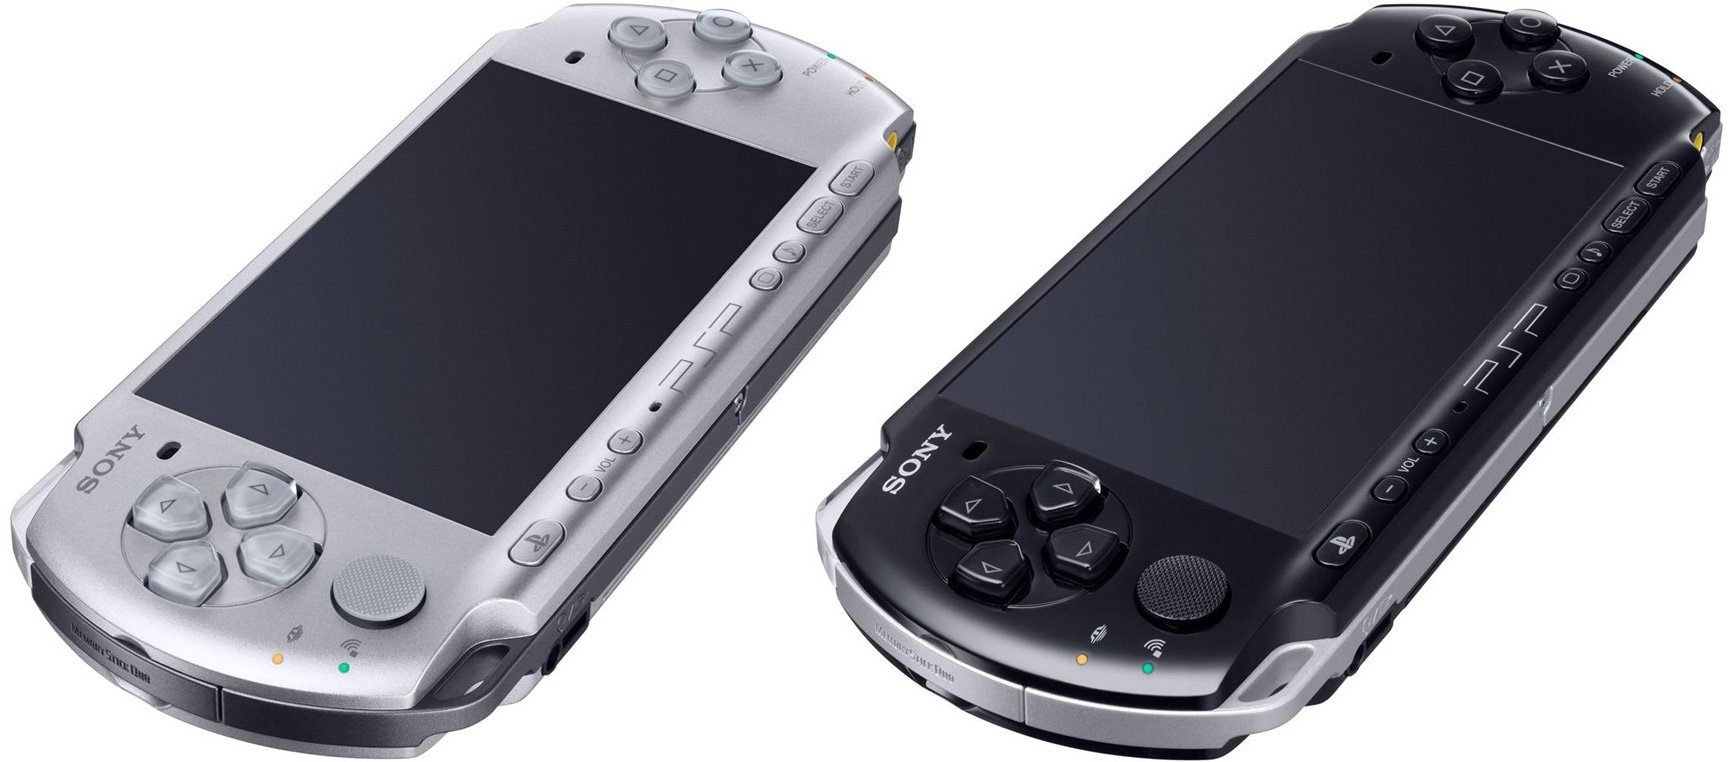 Sony PlayStation Portable Slim & Lite (PSP-3000)